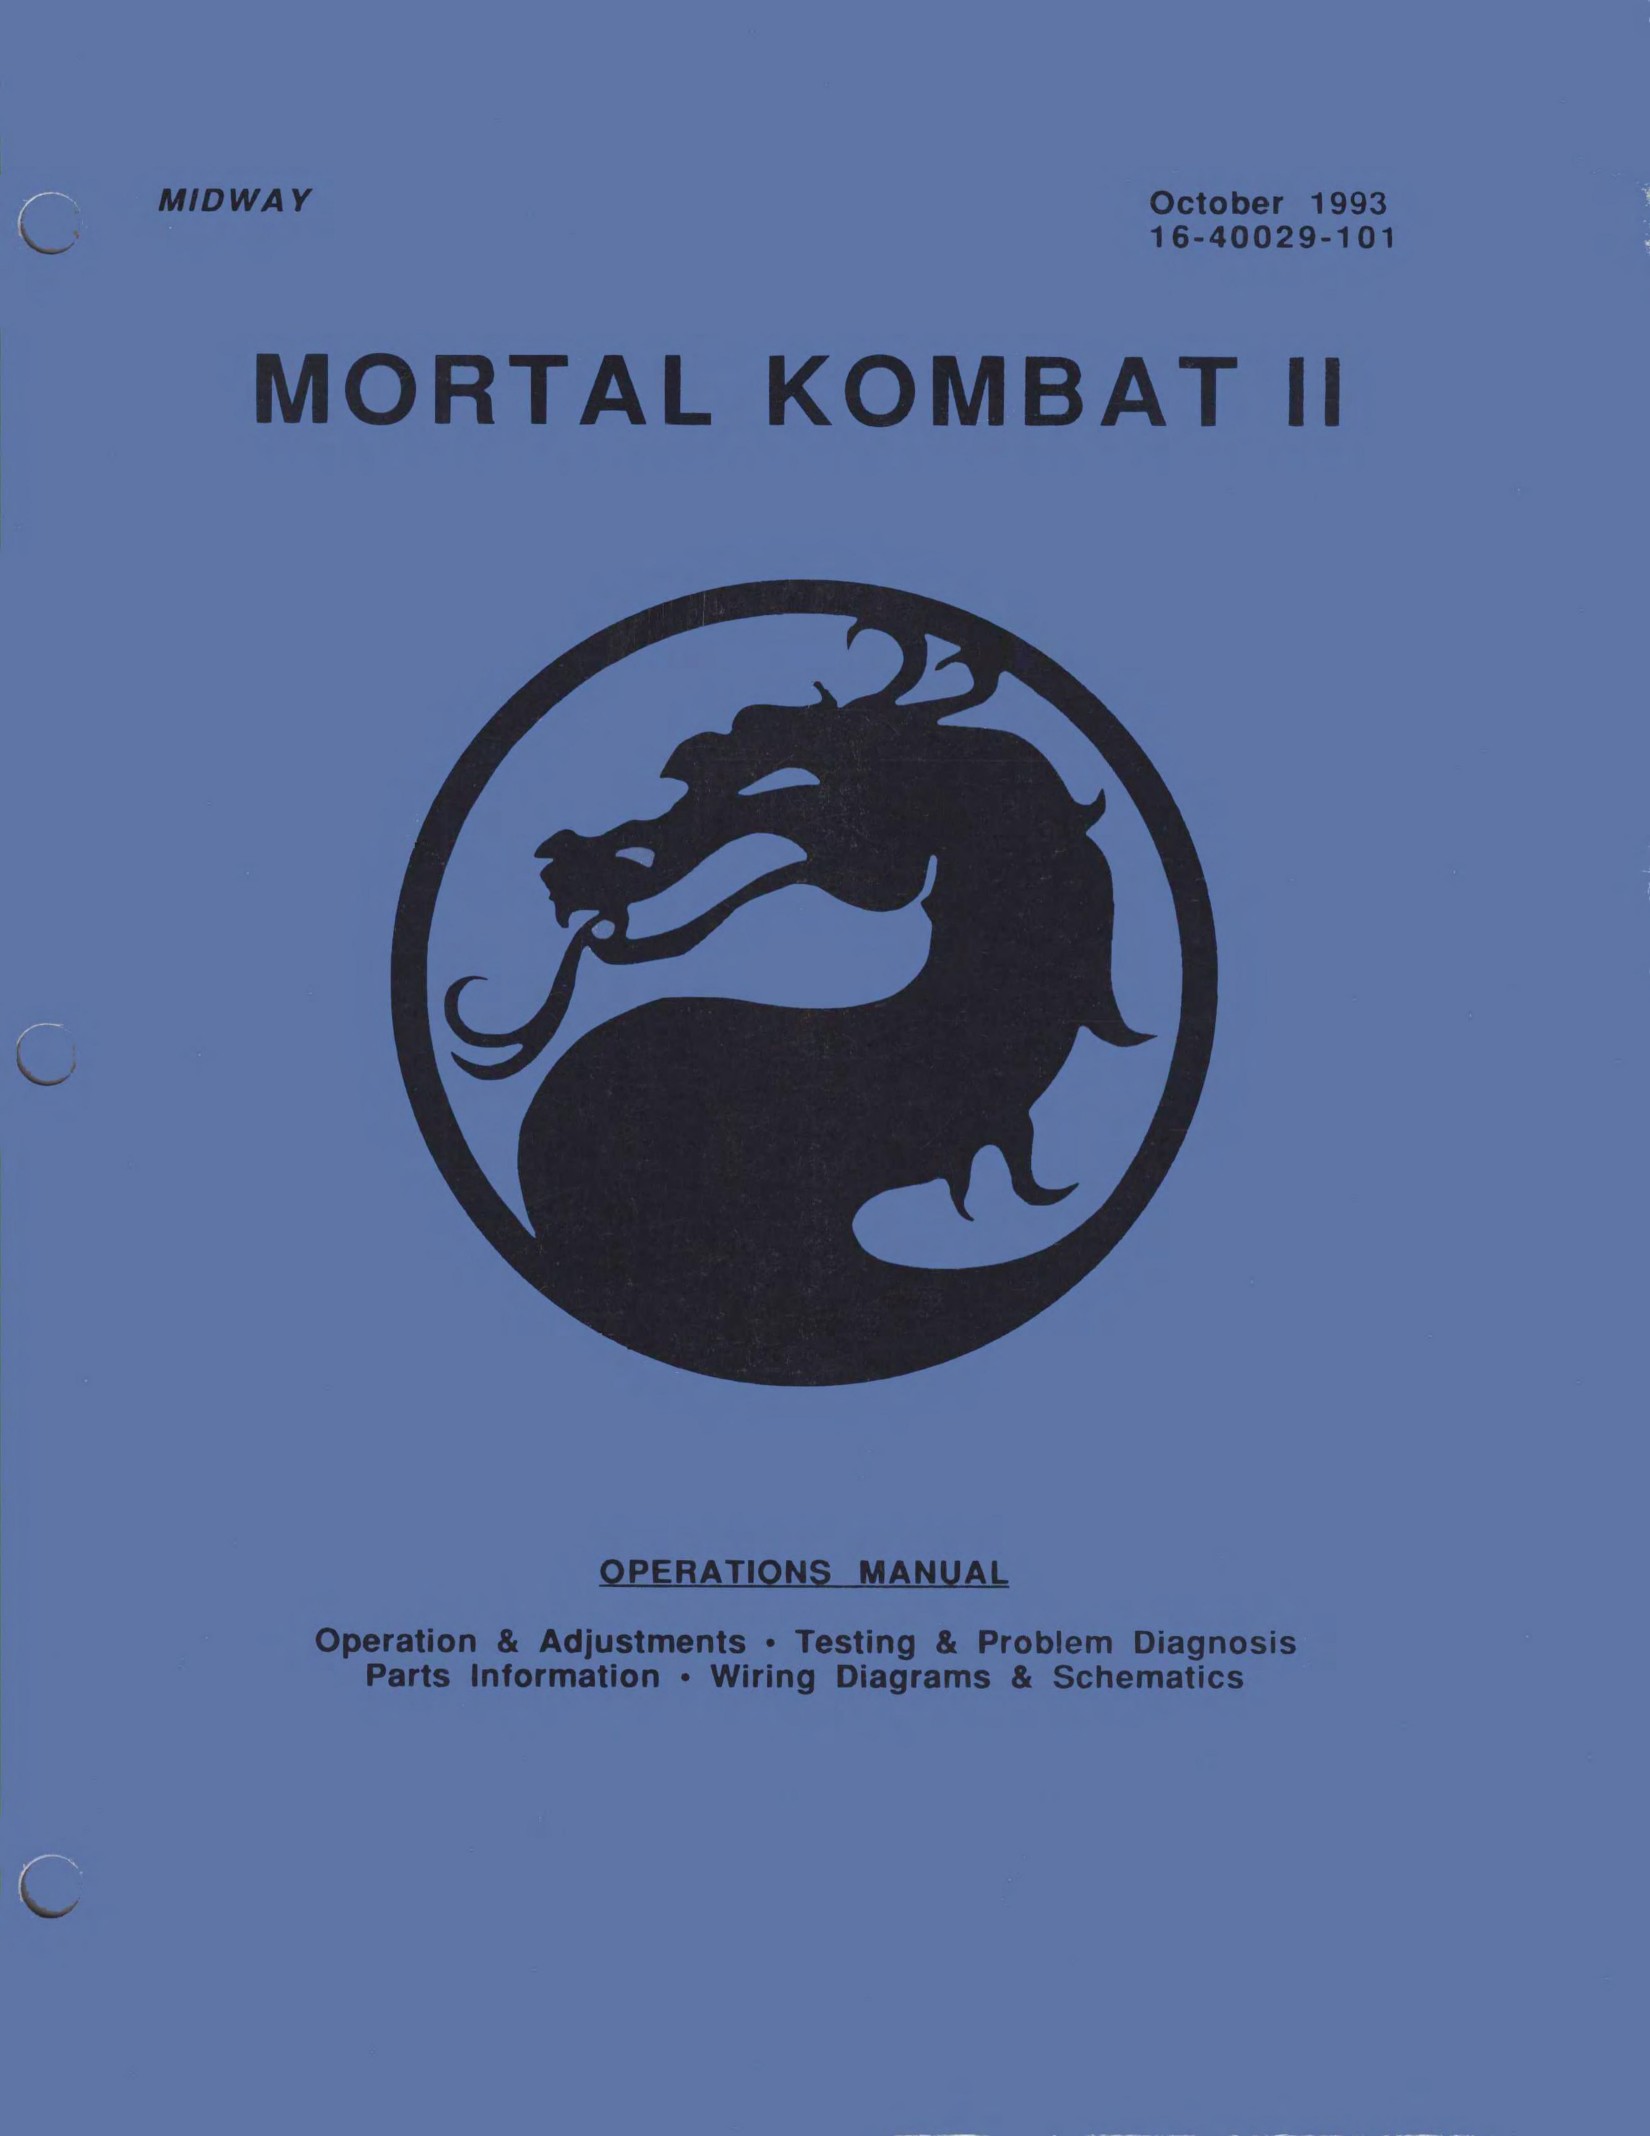 Mortal Kombat 2 (16-40029-101 Oct 1993)